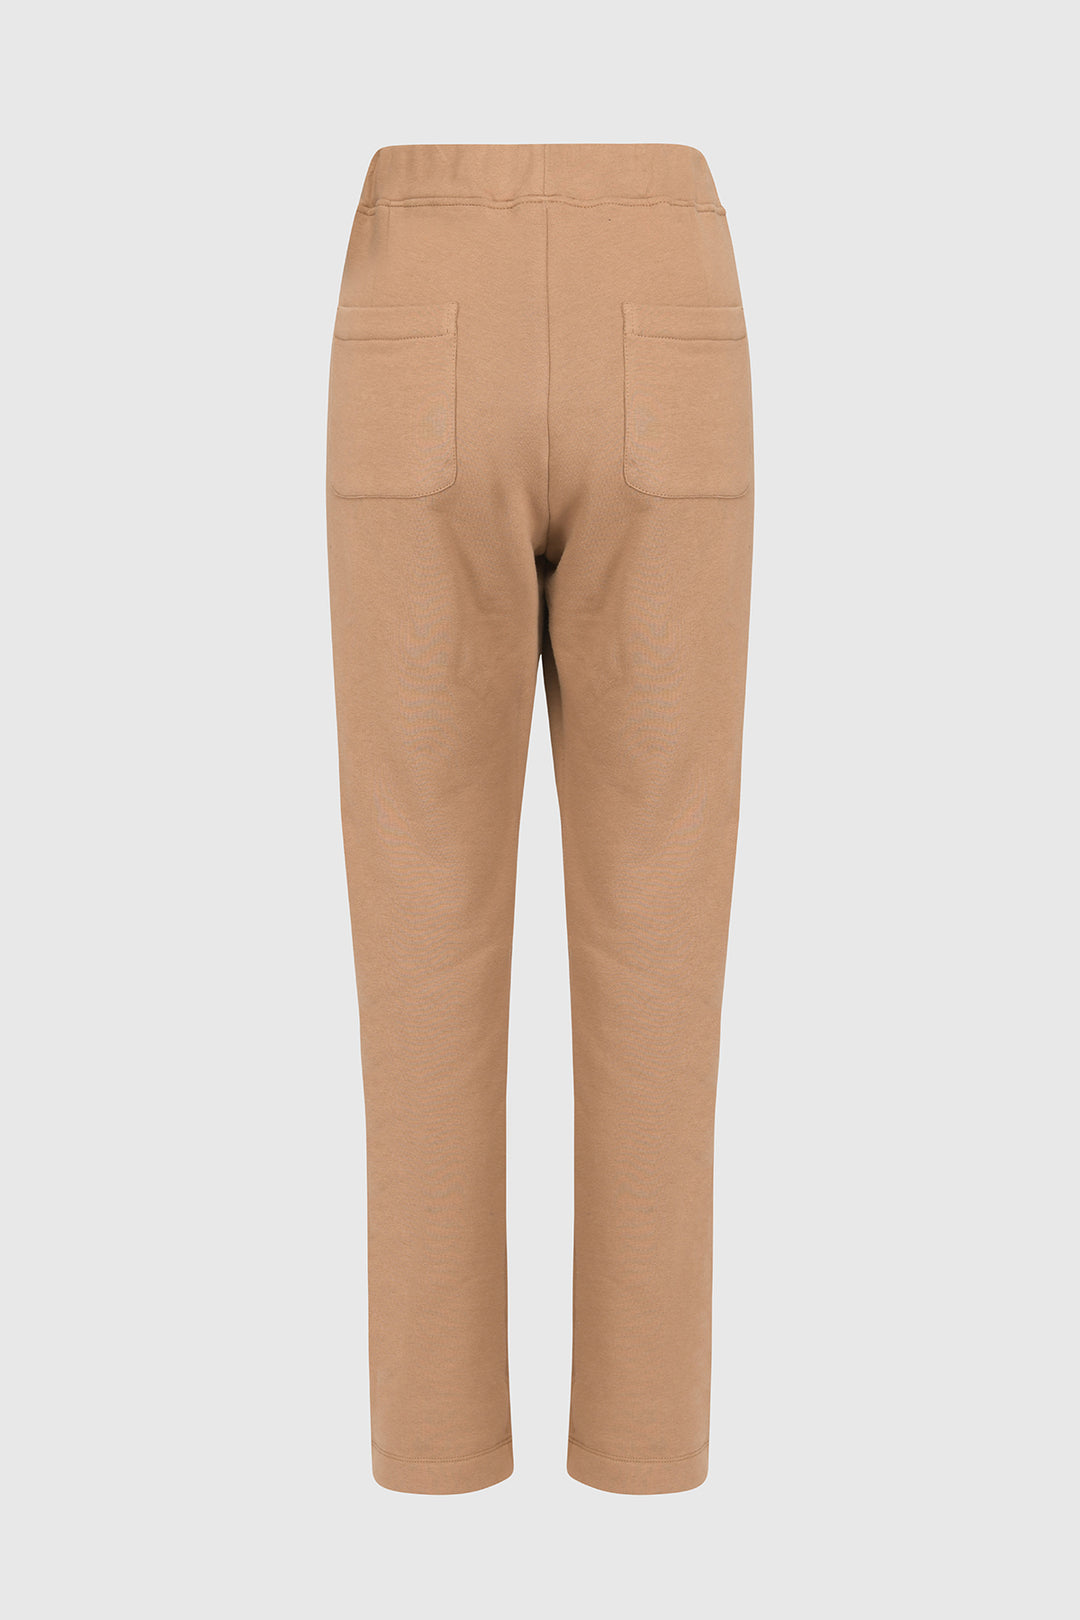 Urban Pocket Pants, Camel/brown